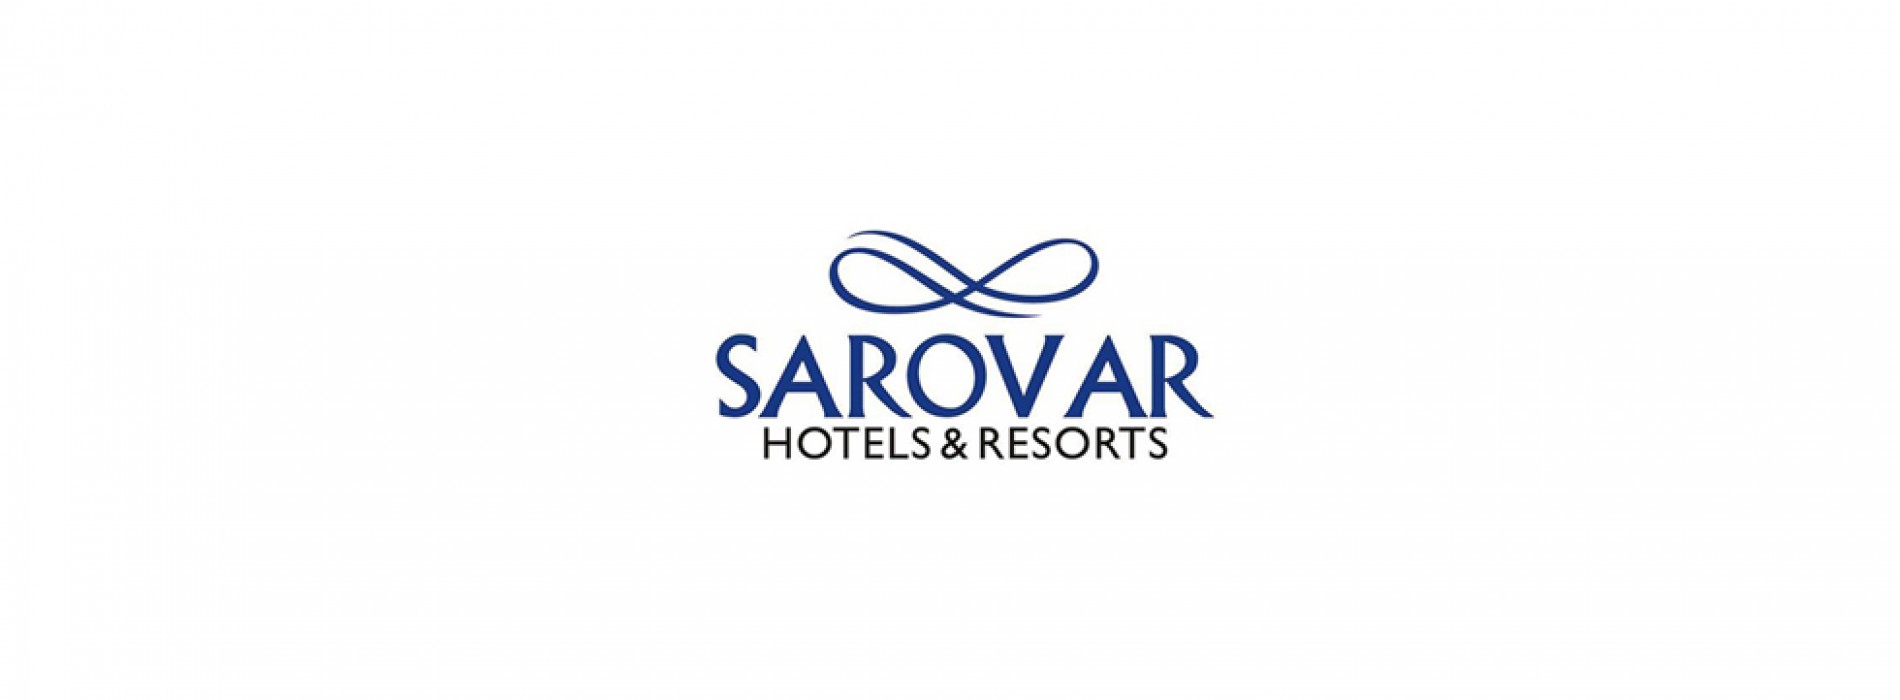 Sarovar Hotels & Resorts signs a new hotel in Dalhousie; expanding its portfolio in leisure destinations